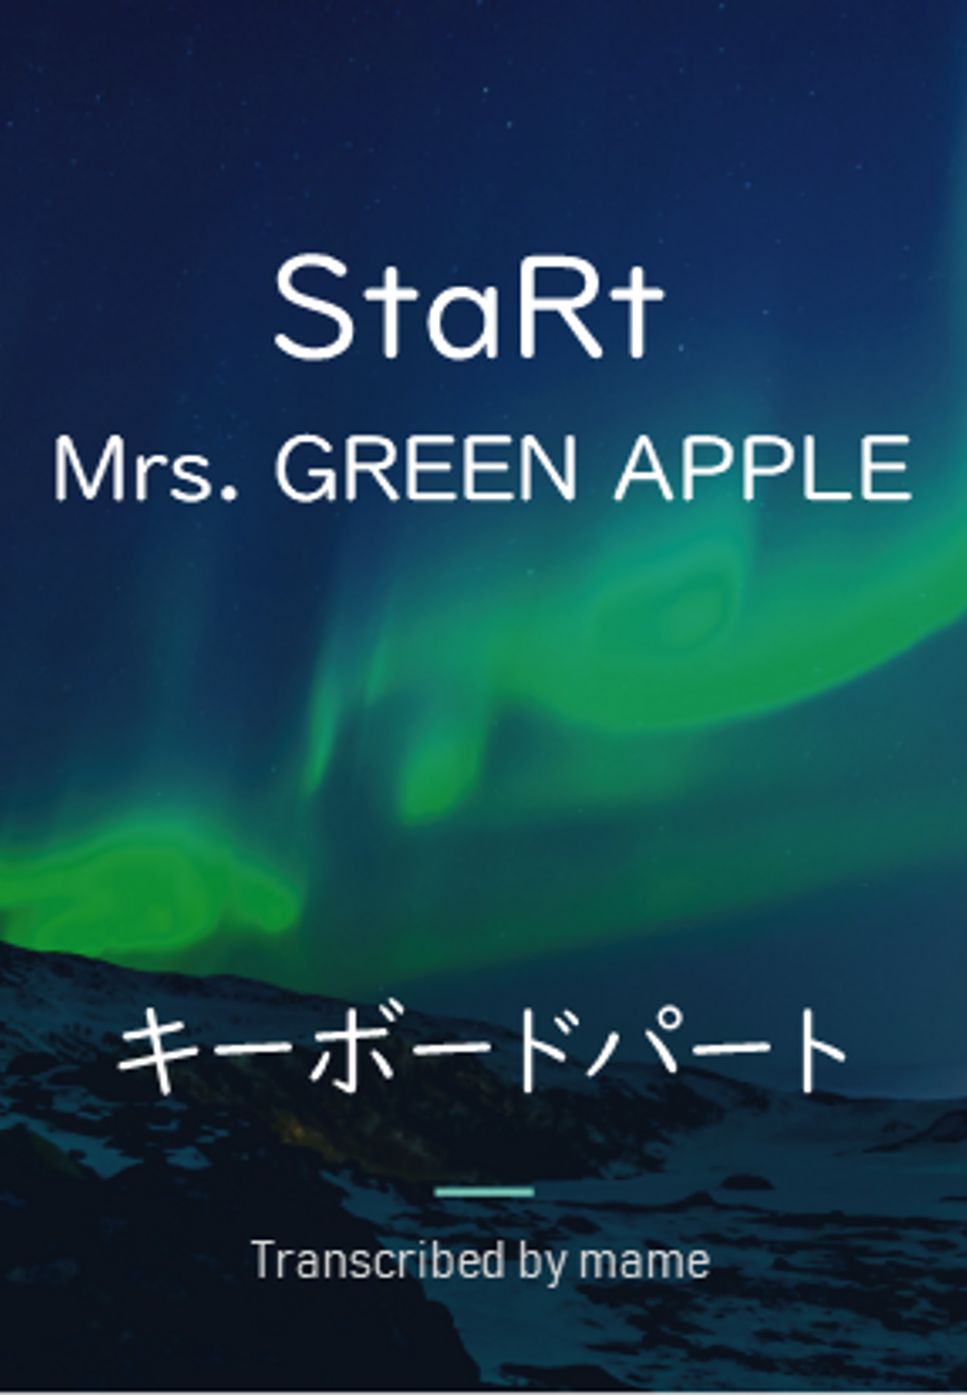 Mrs. GREEN APPLE - StaRt (キーボードパート) by mame